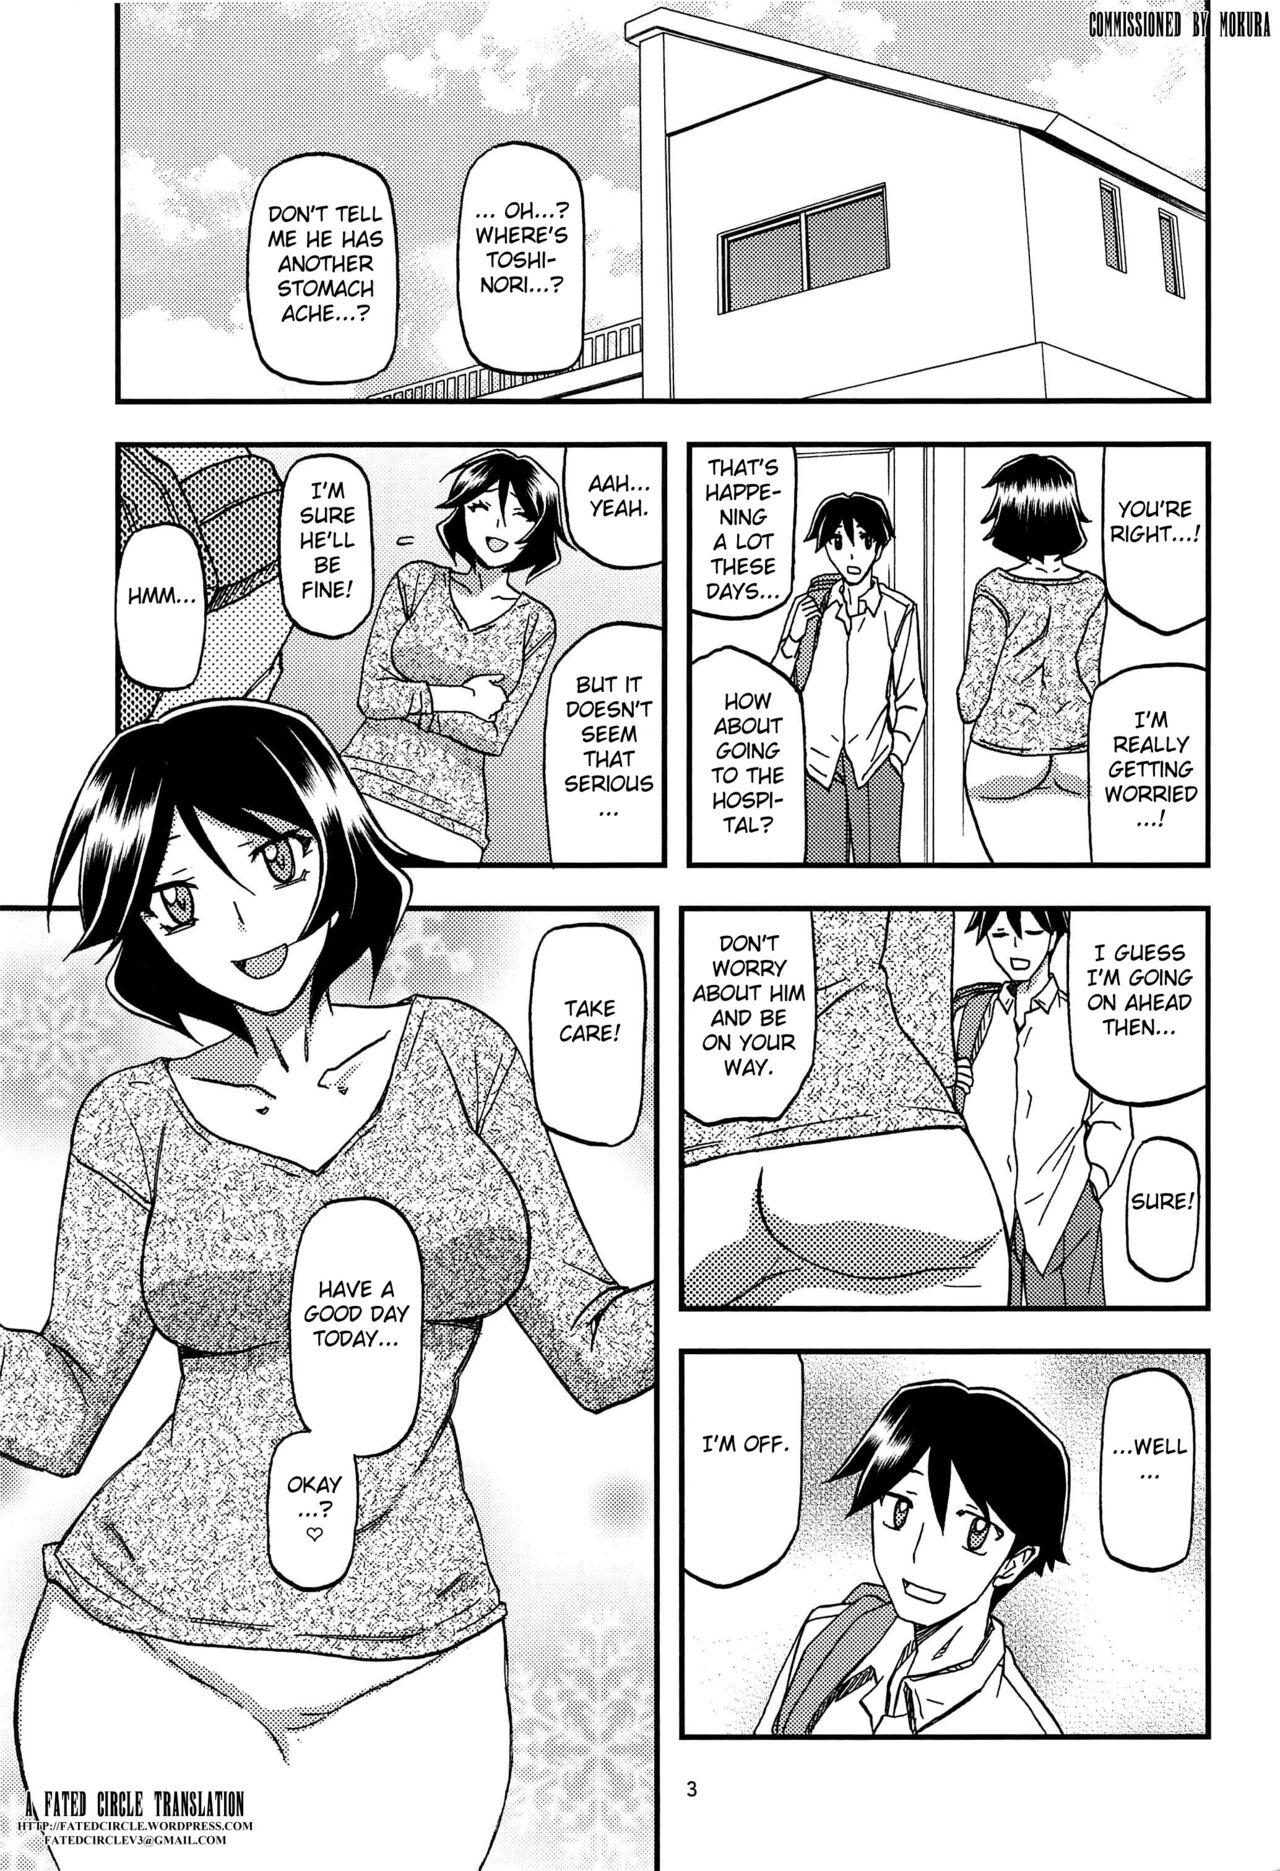 Relax Akebi no Mi - Fumiko AFTER - Akebi no mi Amateur Sex Tapes - Page 3